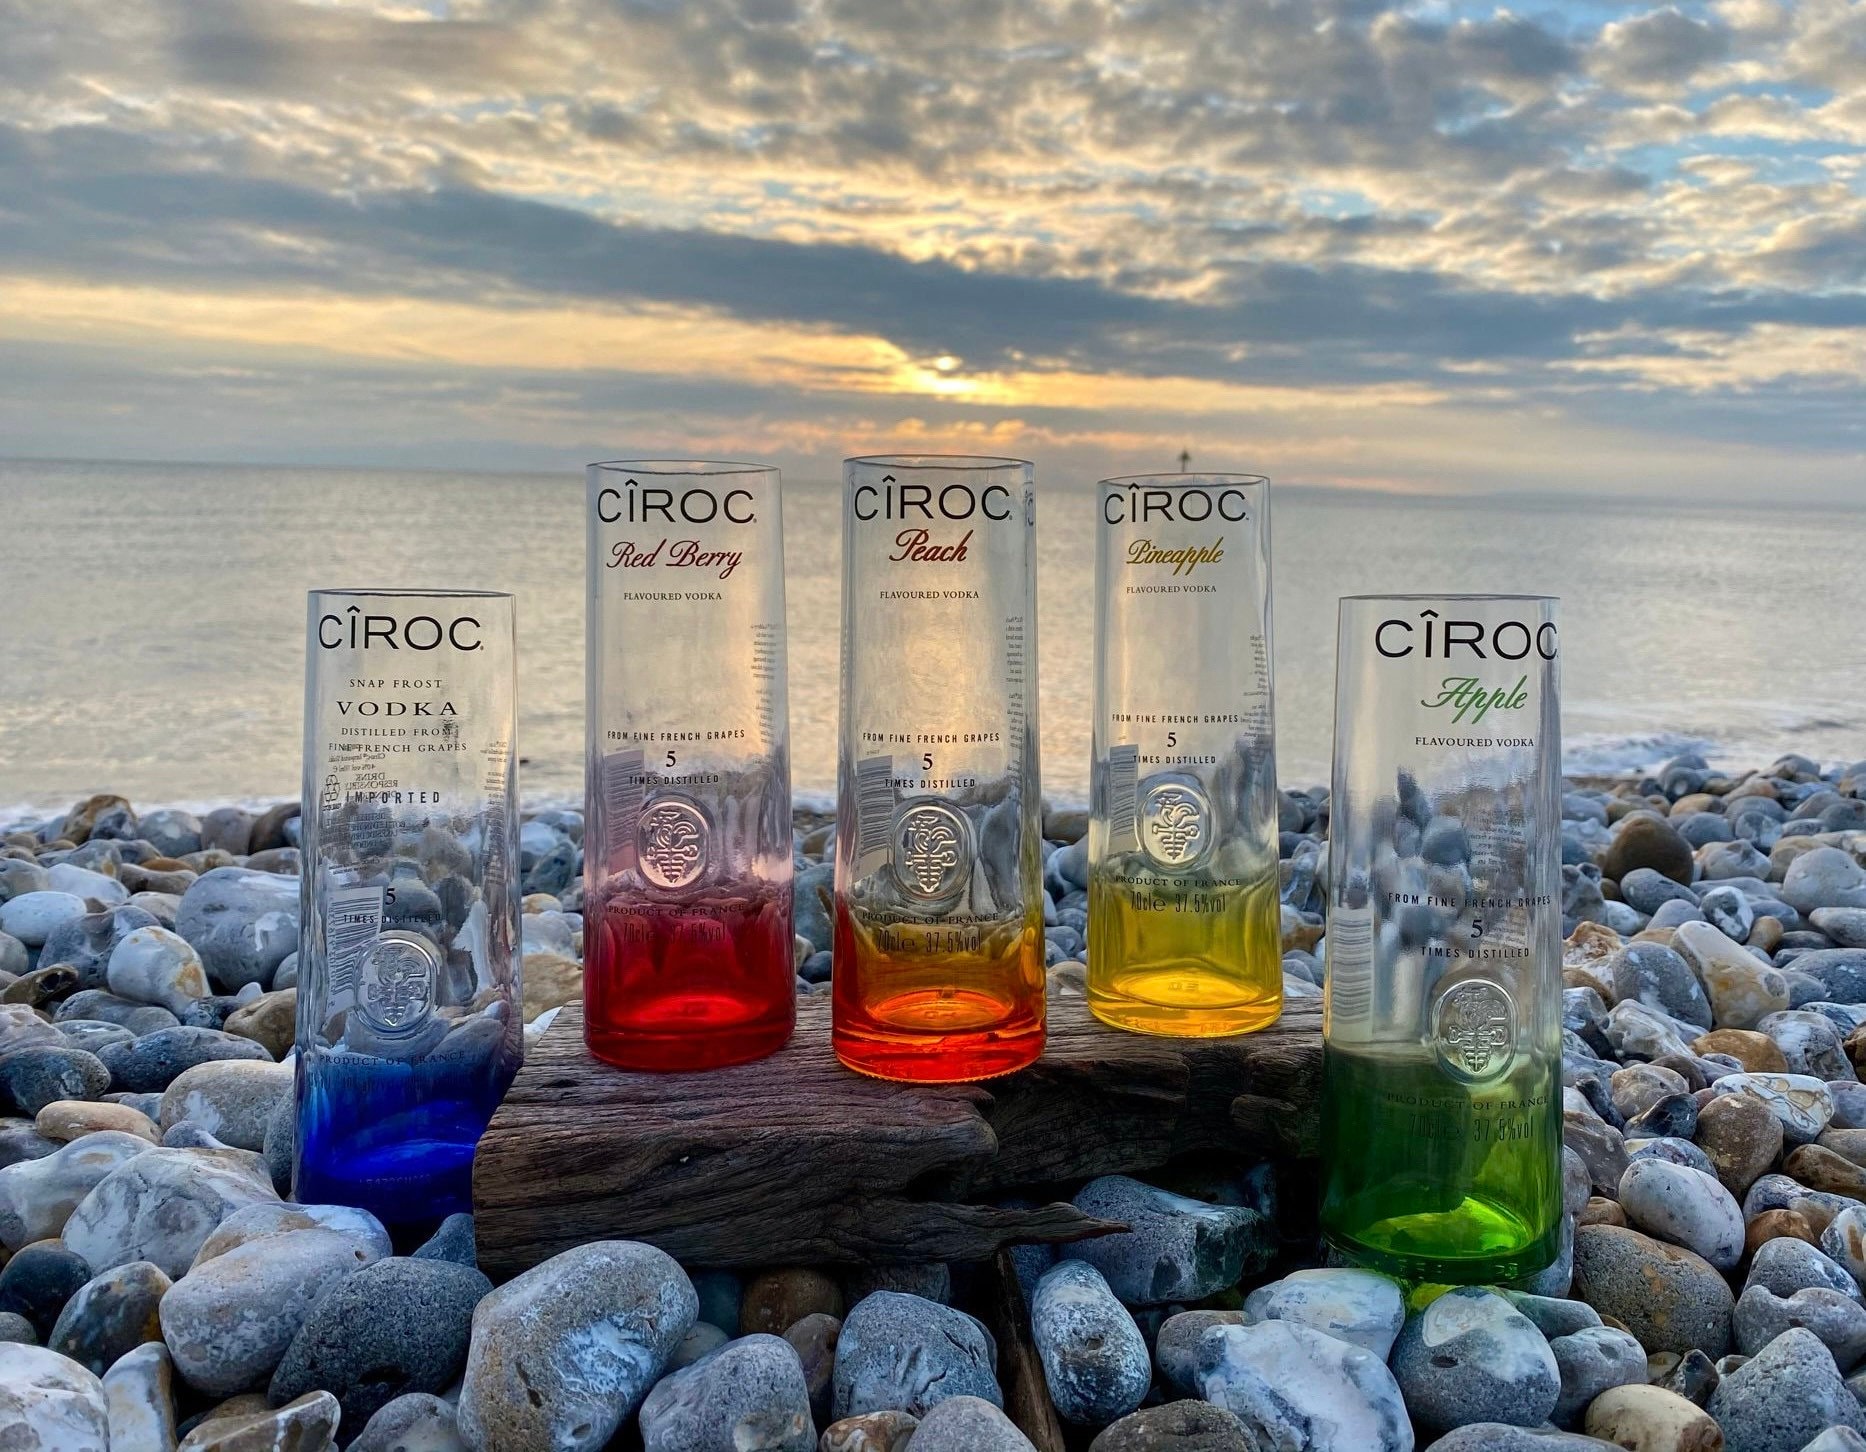 Interesse drøm Governable Upcycled Ciroc Glasses Glassware Gift for Him Unique Vodka - Etsy